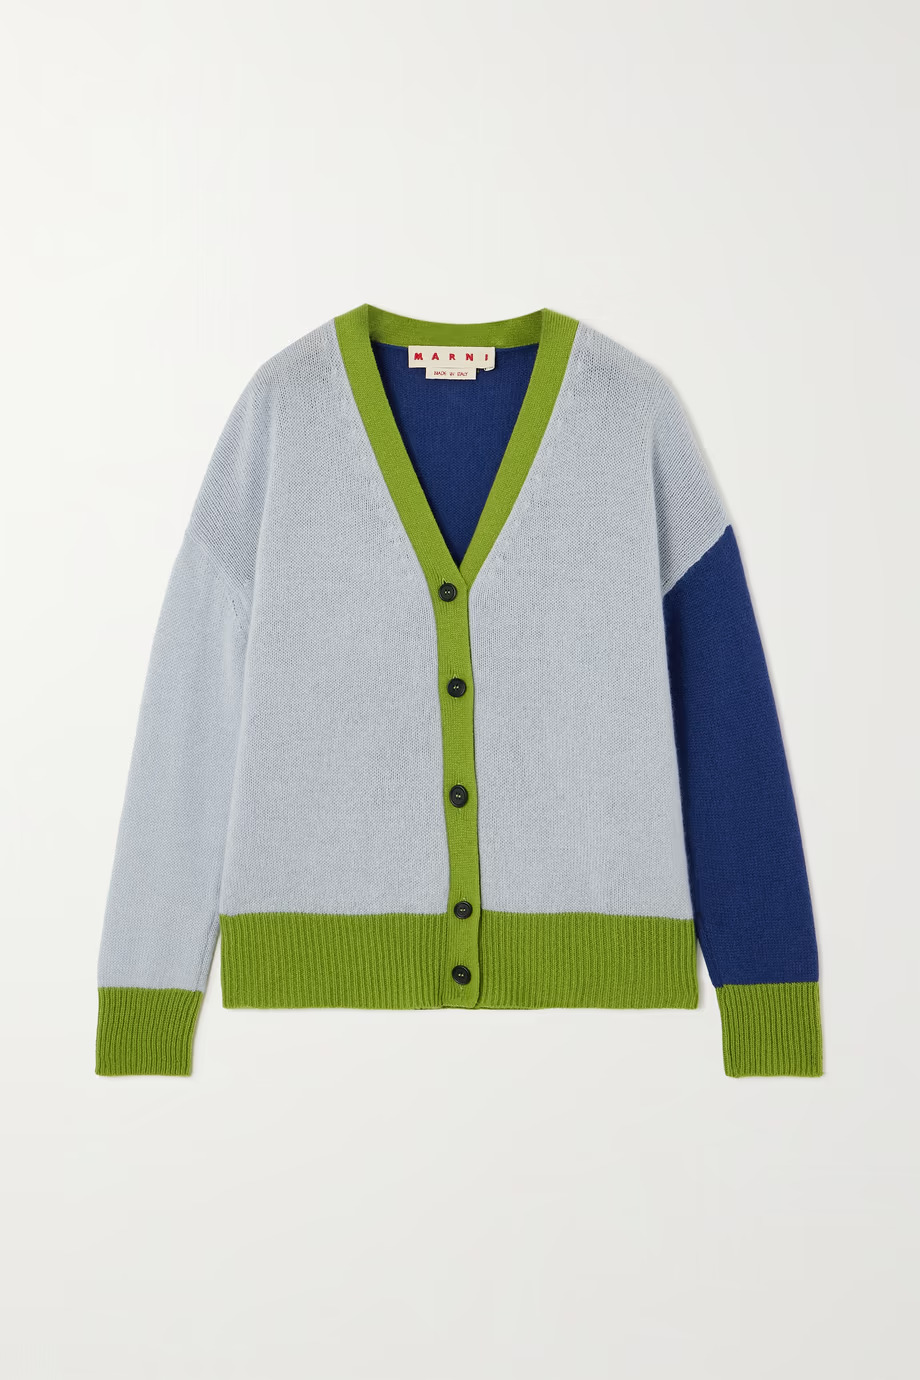 Marni + Color-Block Cashmere Cardigan